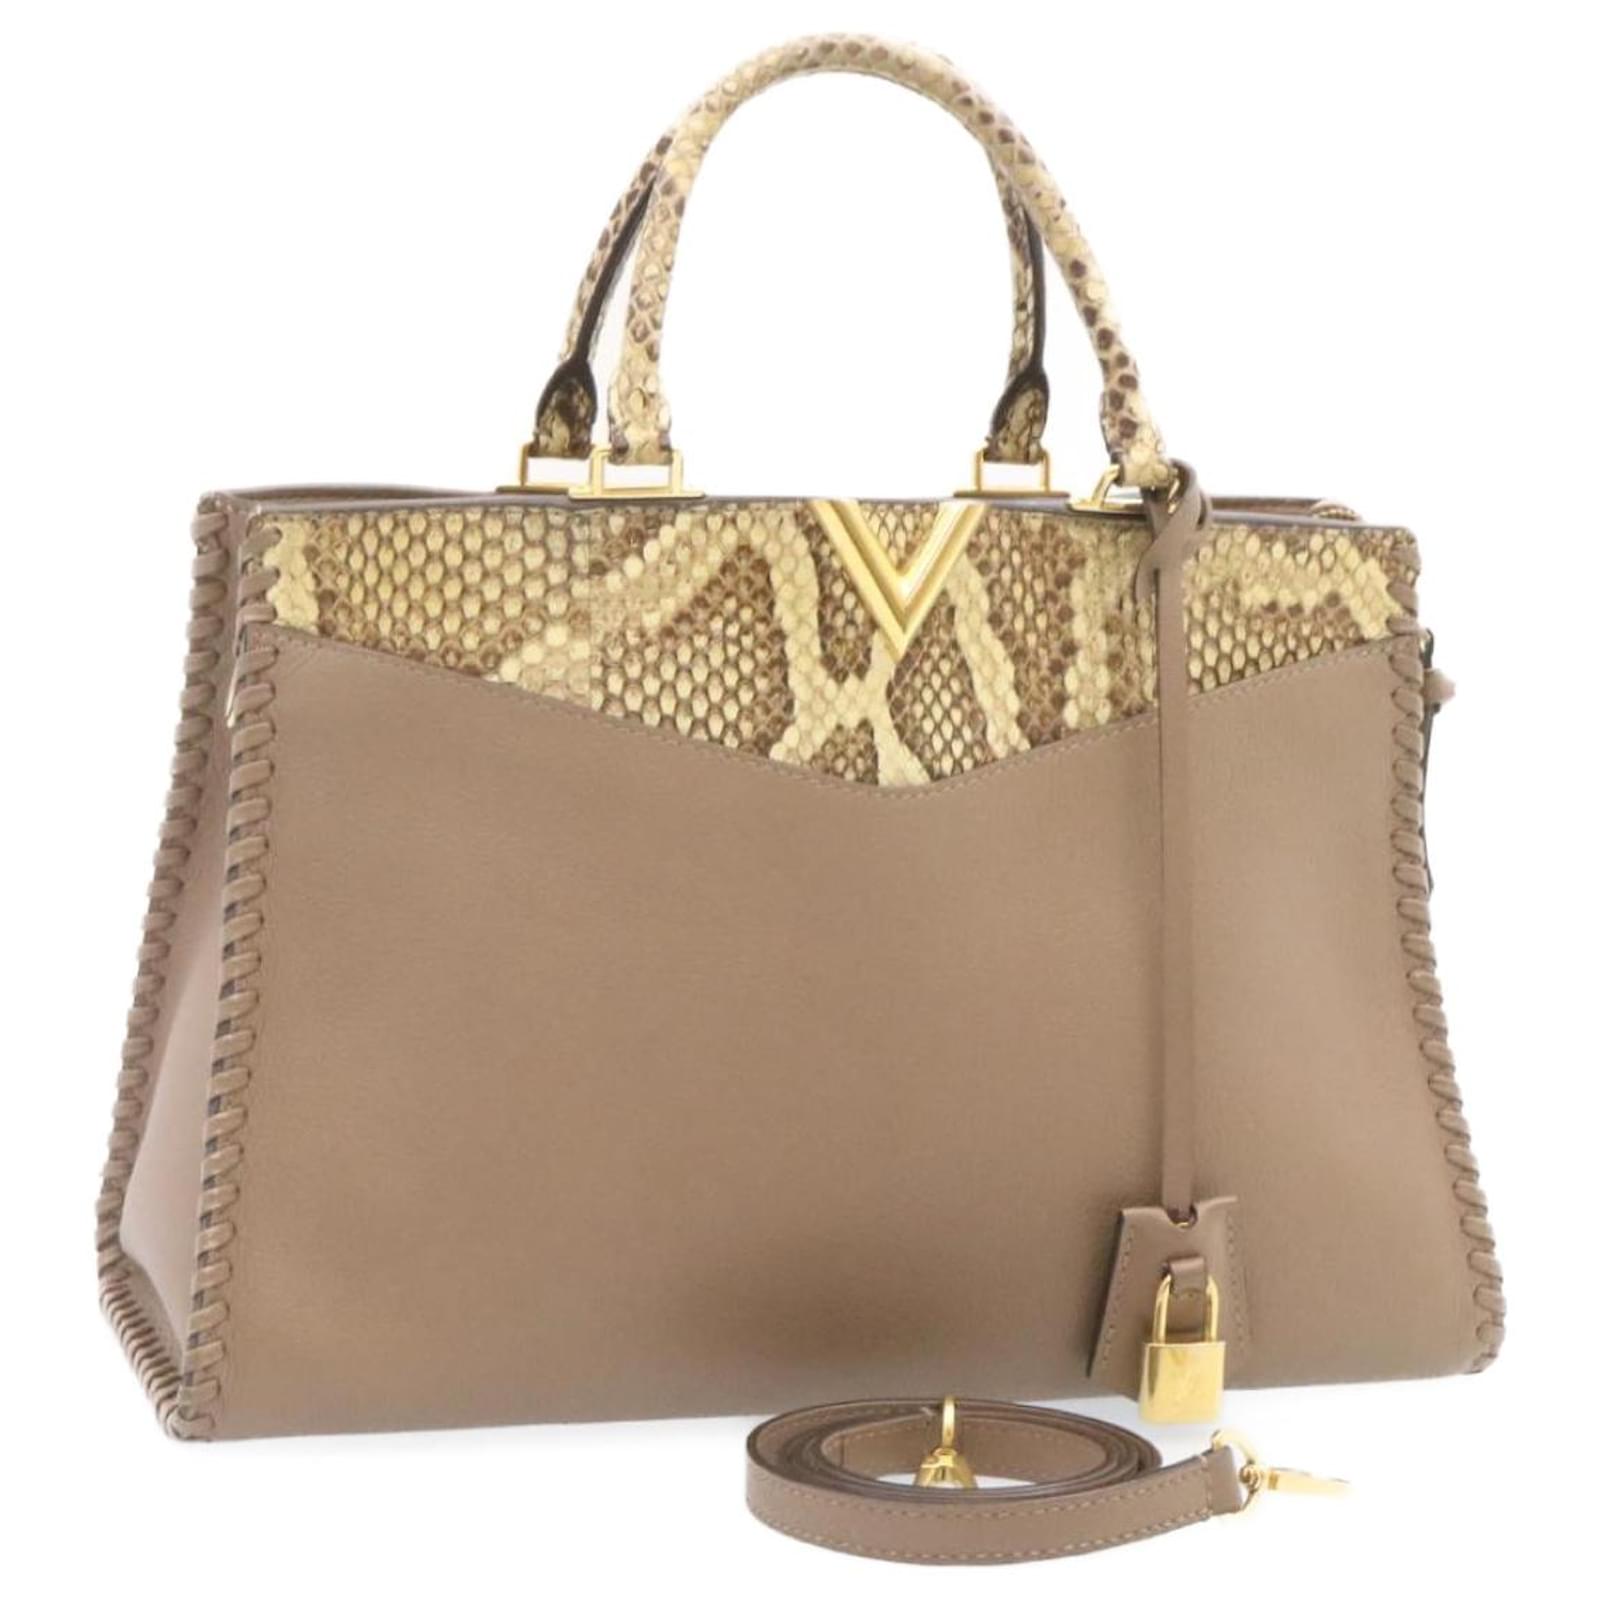 Handbags Louis Vuitton Louis Vuitton Very Zip Tote Hand Bag Leather Snake Skin N94301 LV Auth 24504a